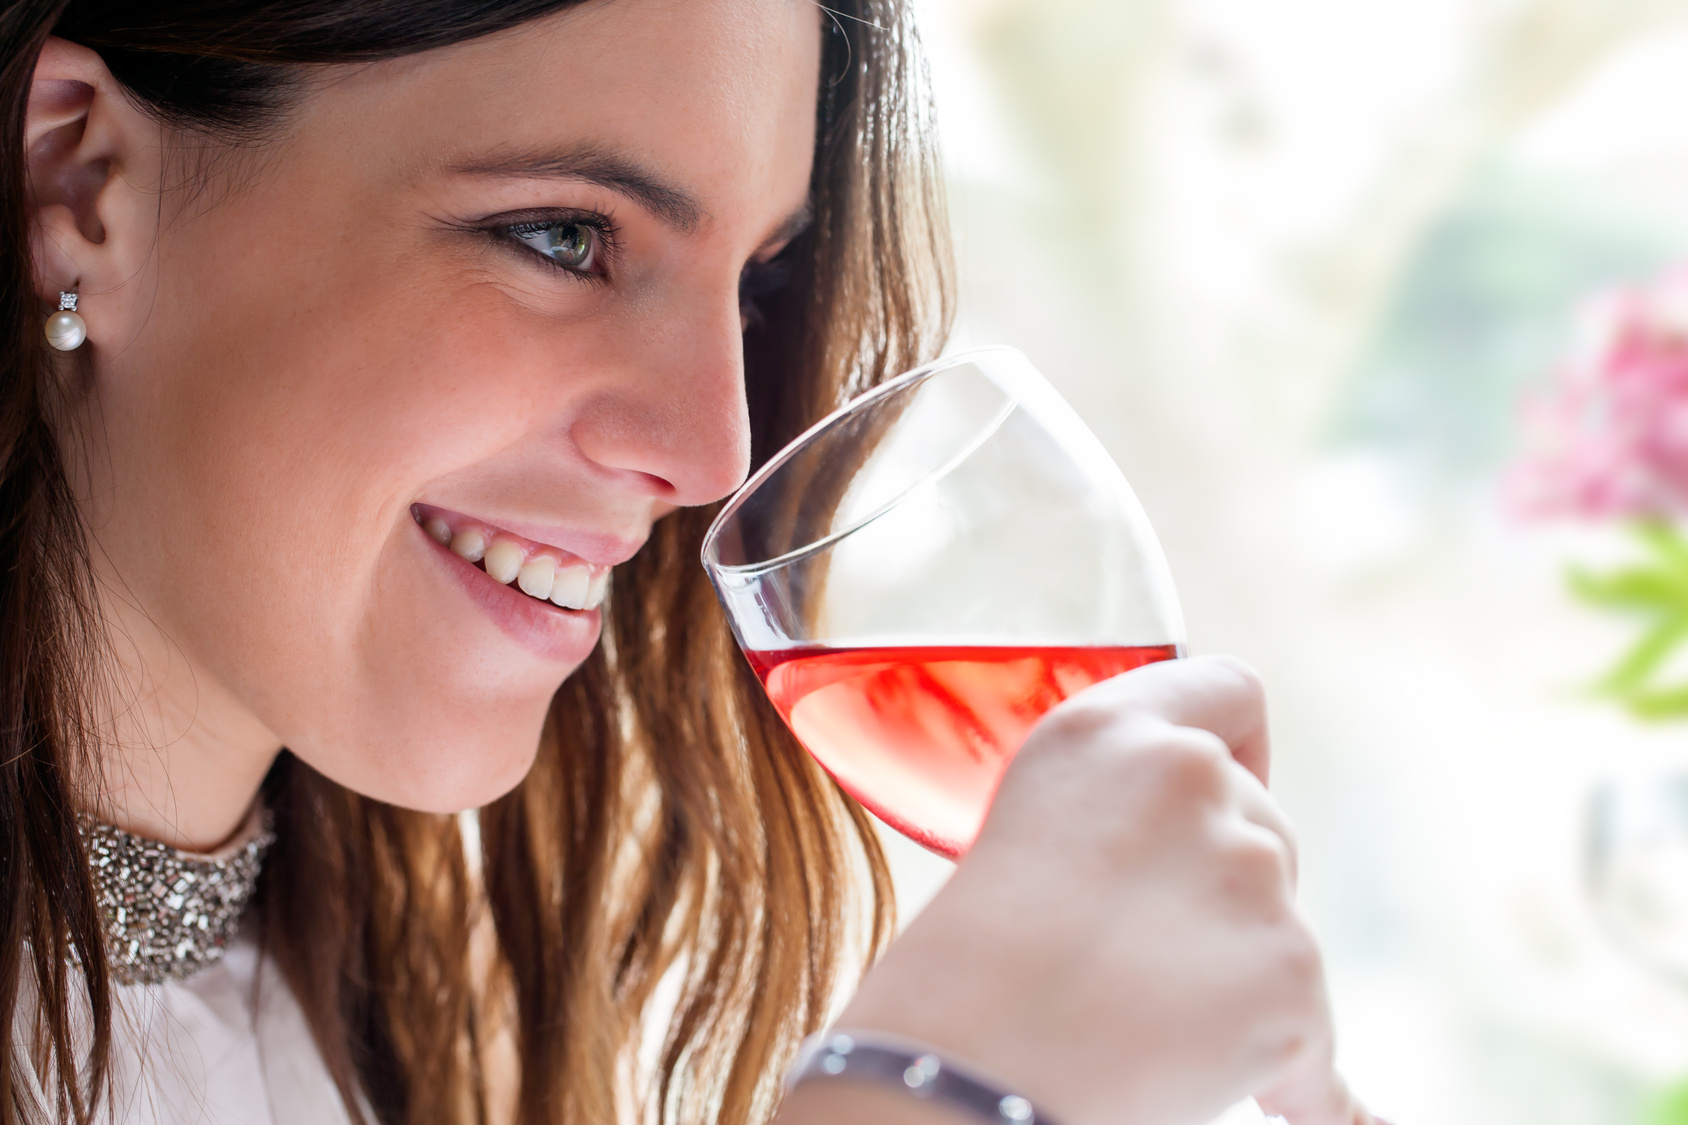 Attractive girl enjoying glass of wine.